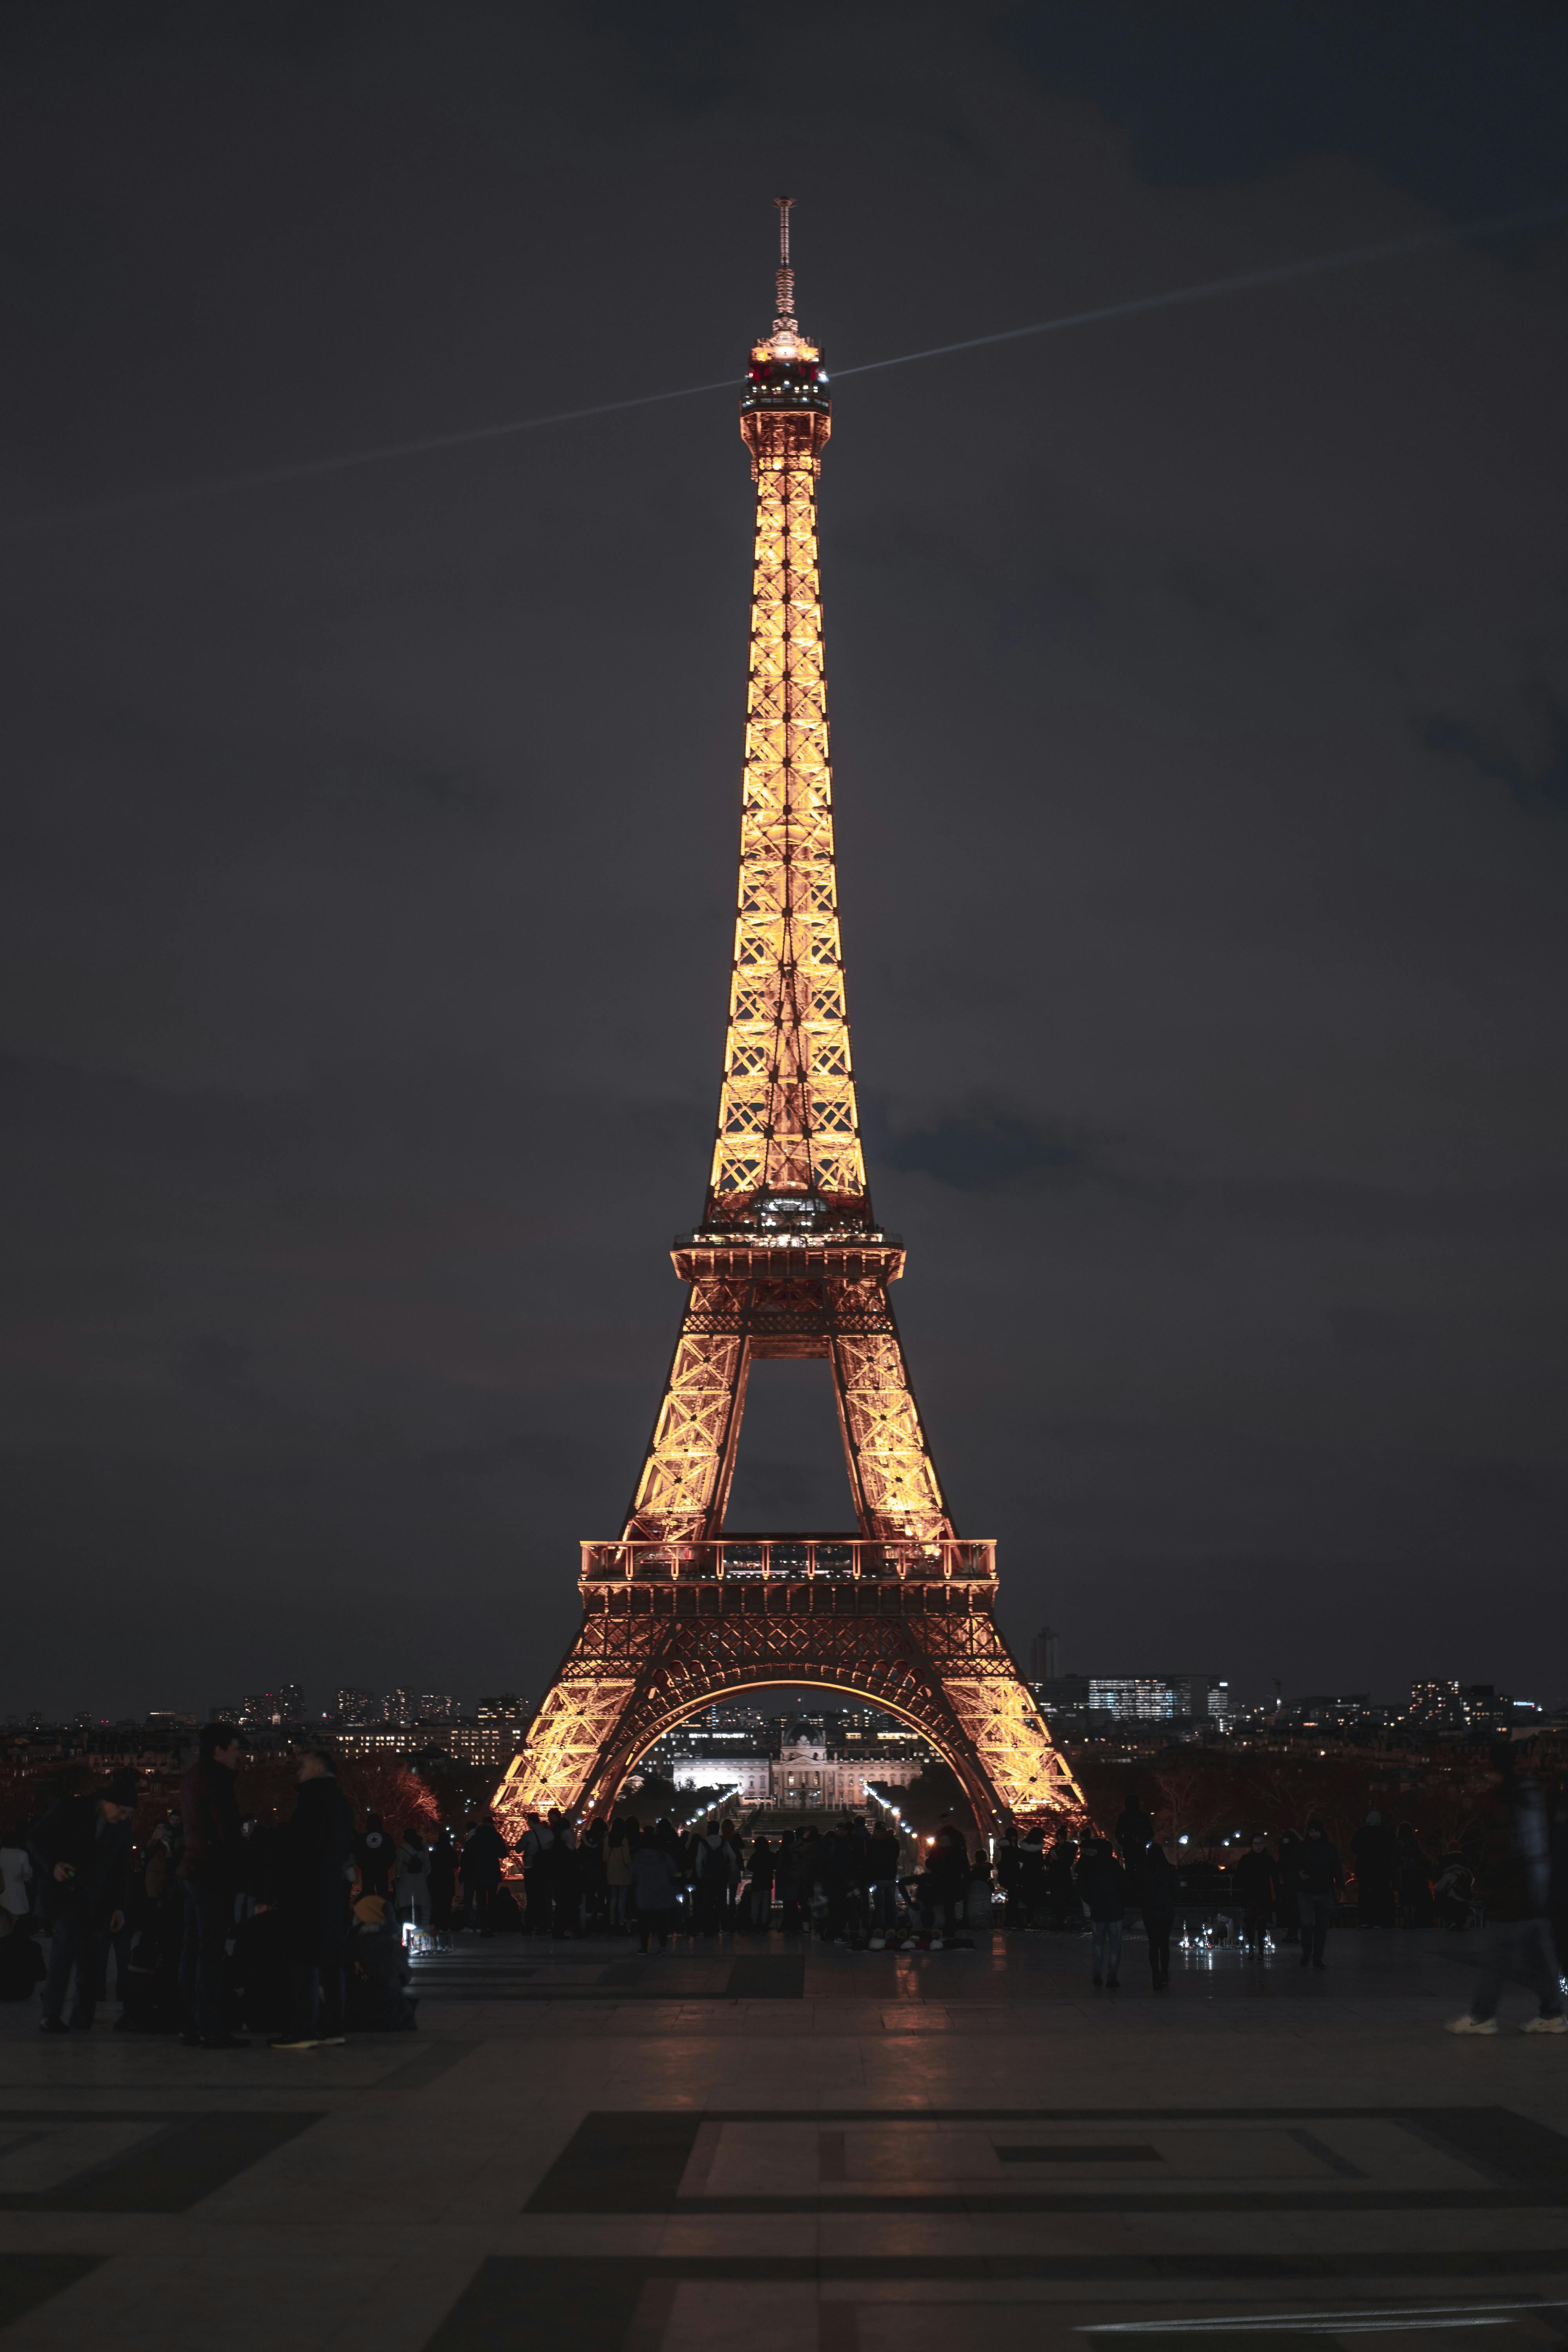 Eiffel Tower At Night · Free Stock Photo